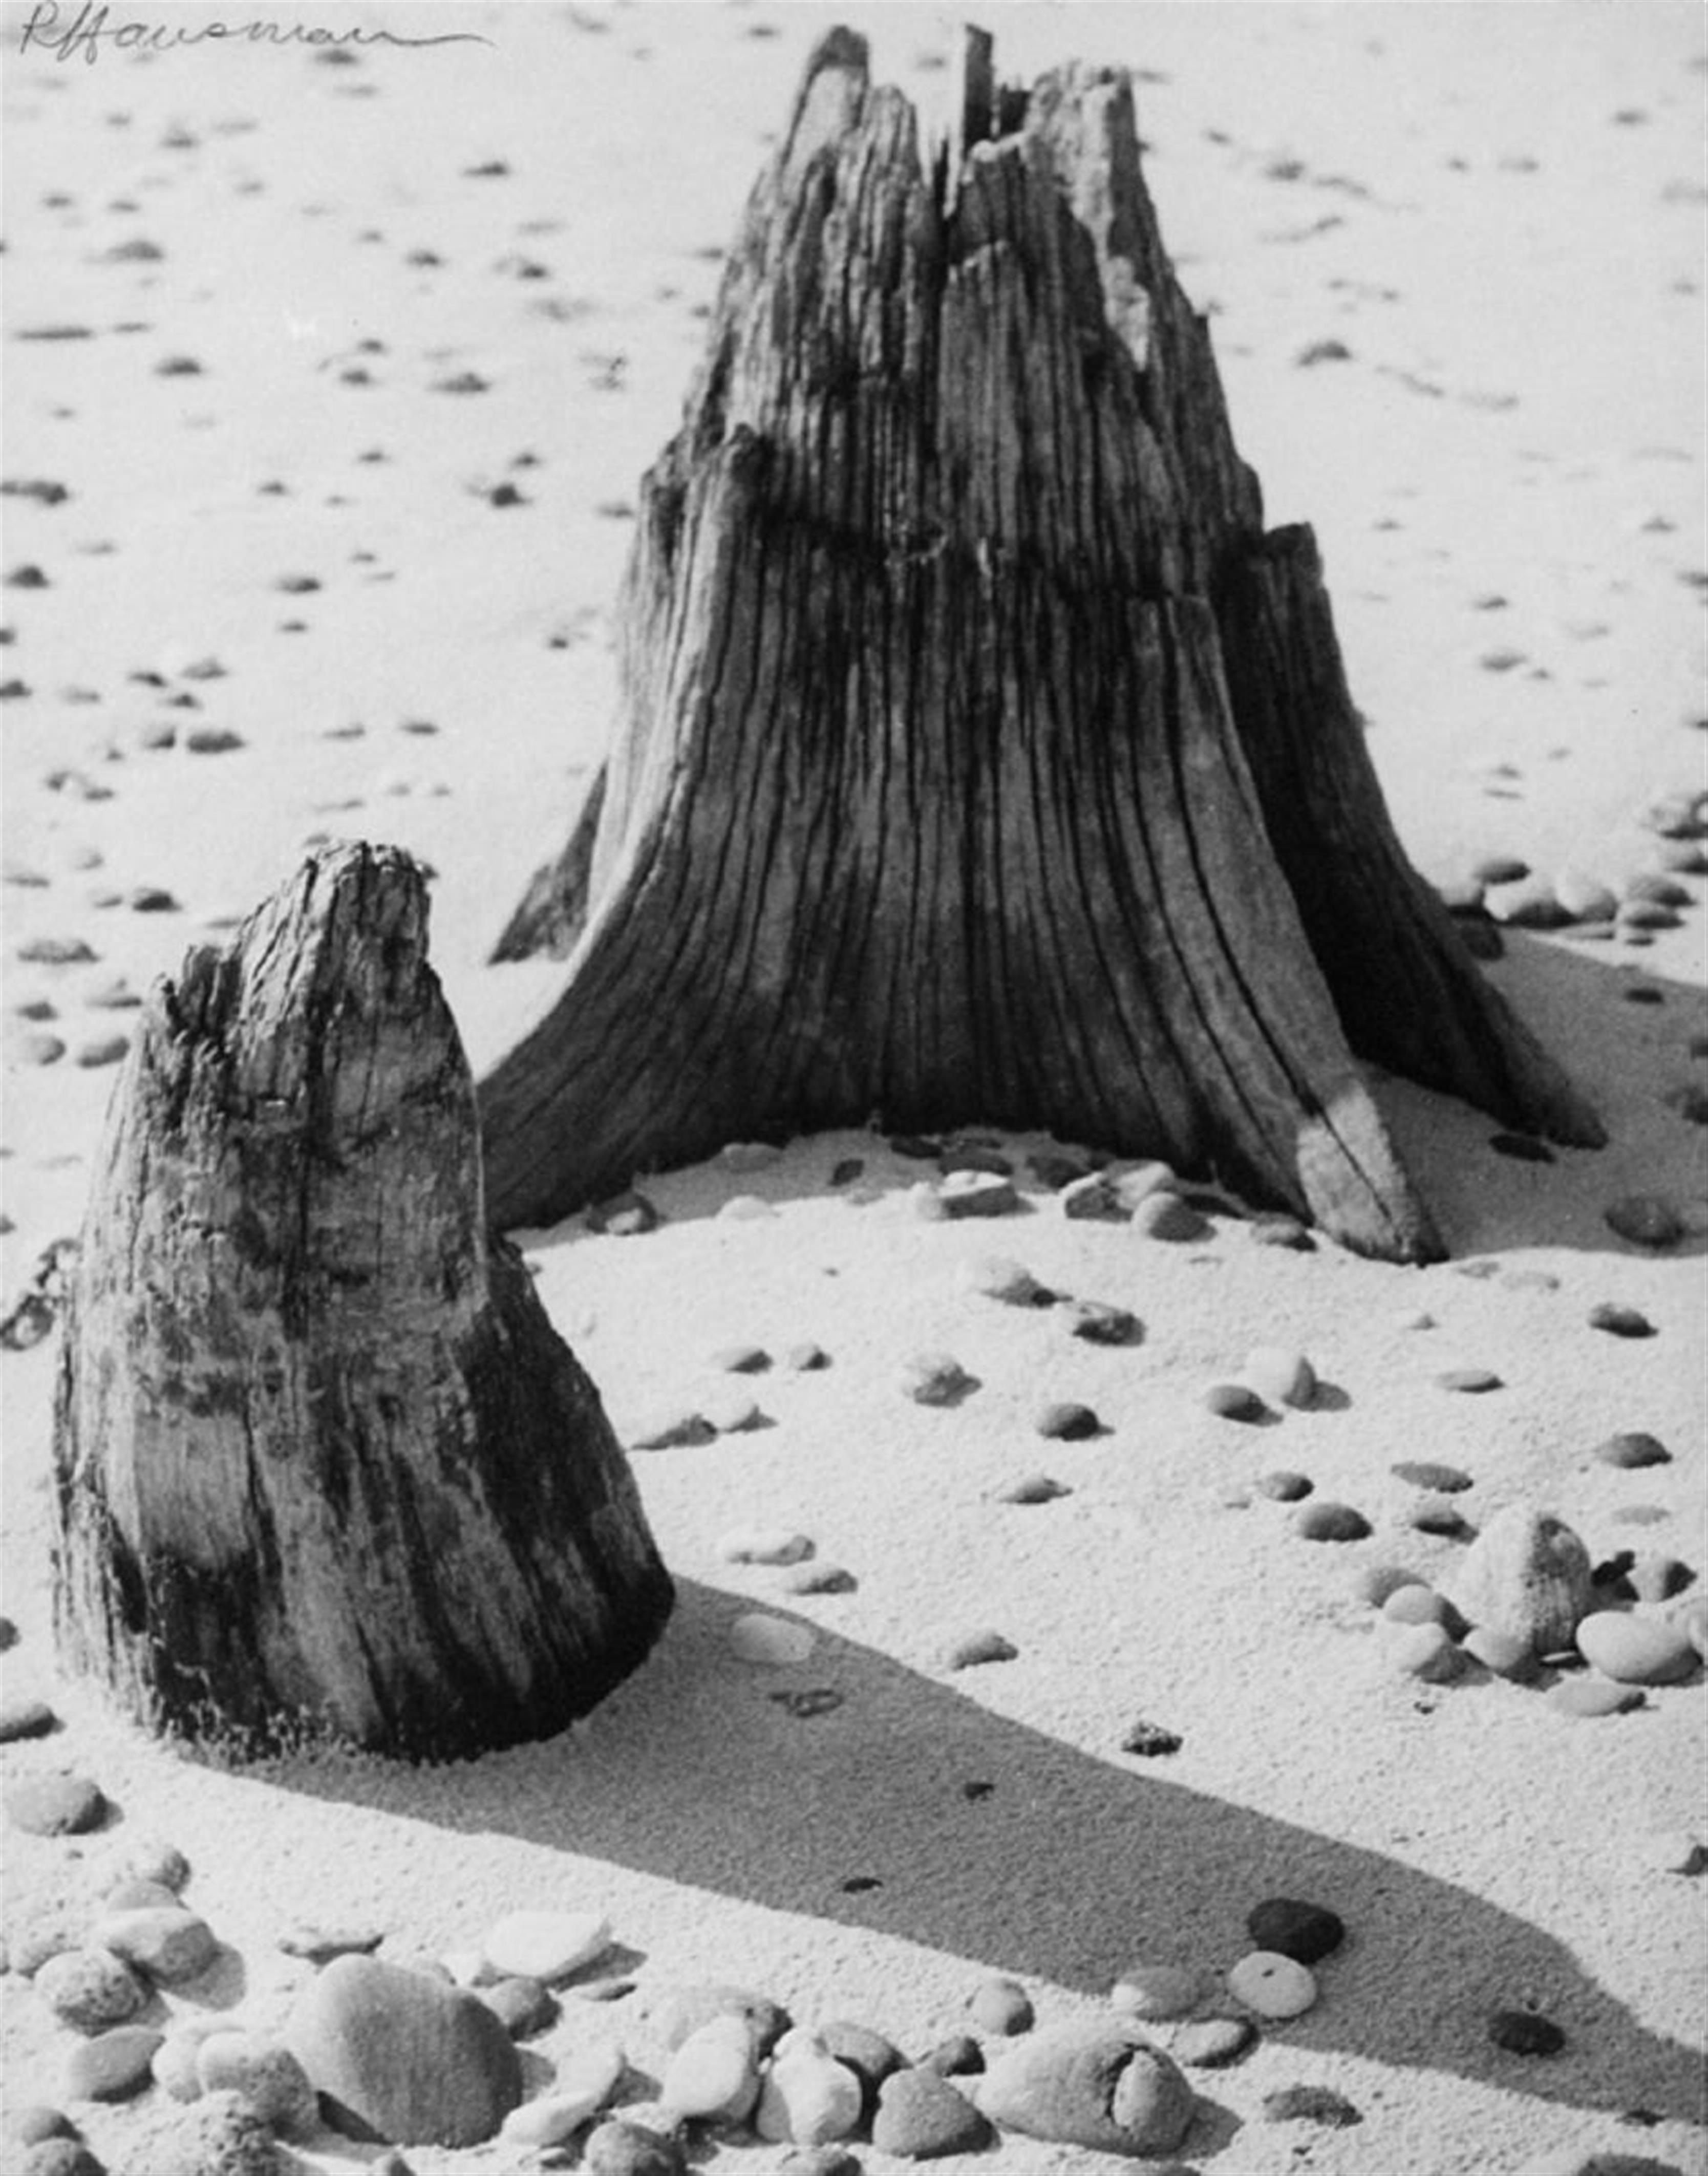 Raoul Hausmann - Baumstümpfe im Sand, Sylt - image-1